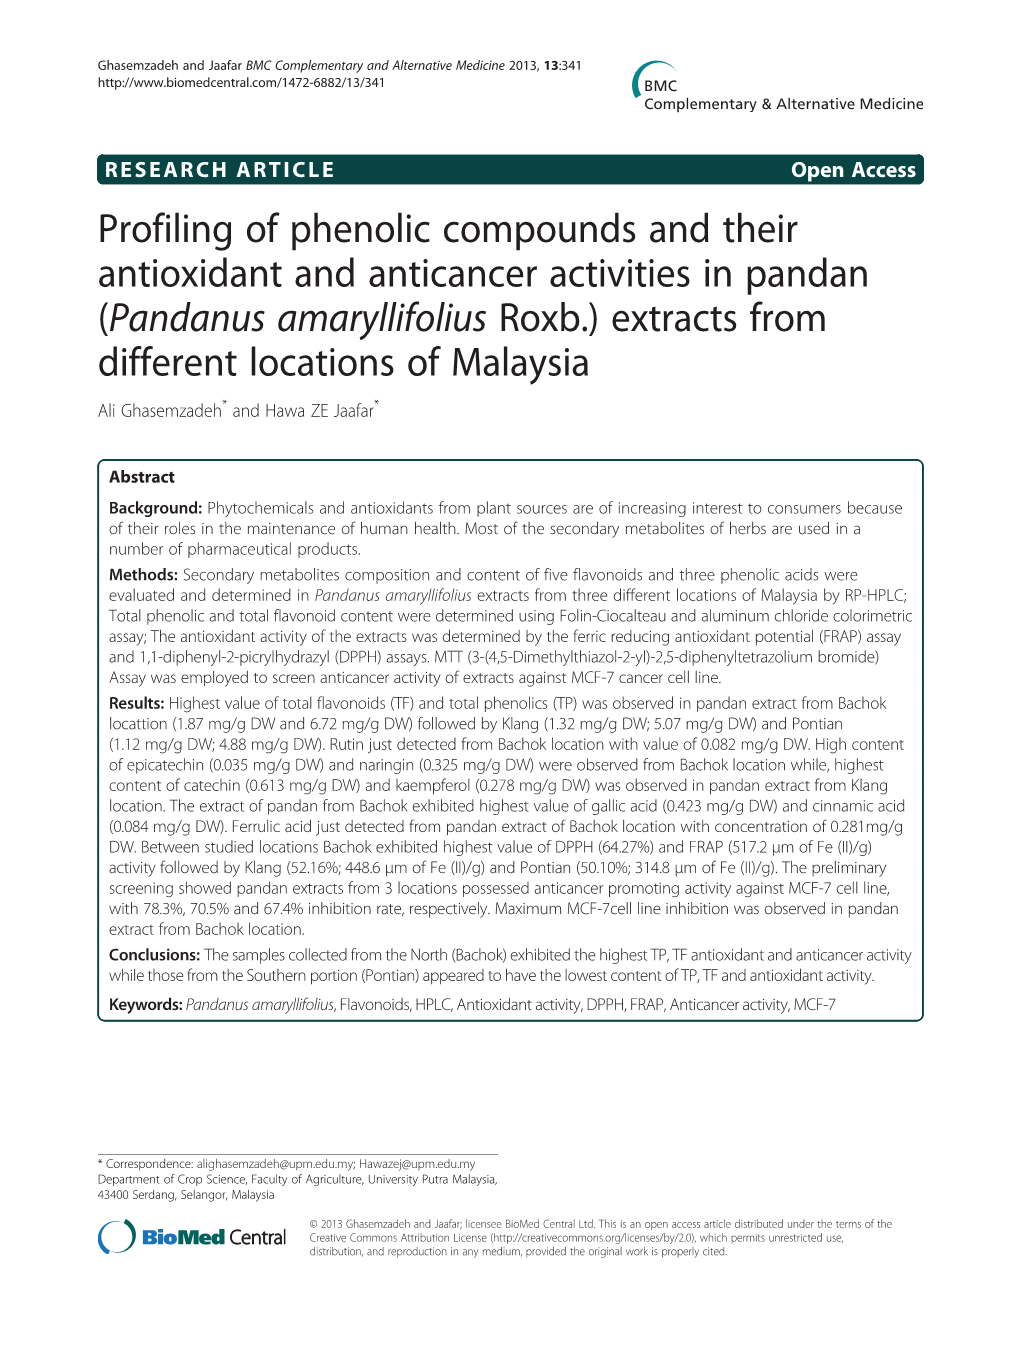 Pandanus Amaryllifolius Roxb.) Extracts from Different Locations of Malaysia Ali Ghasemzadeh* and Hawa ZE Jaafar*